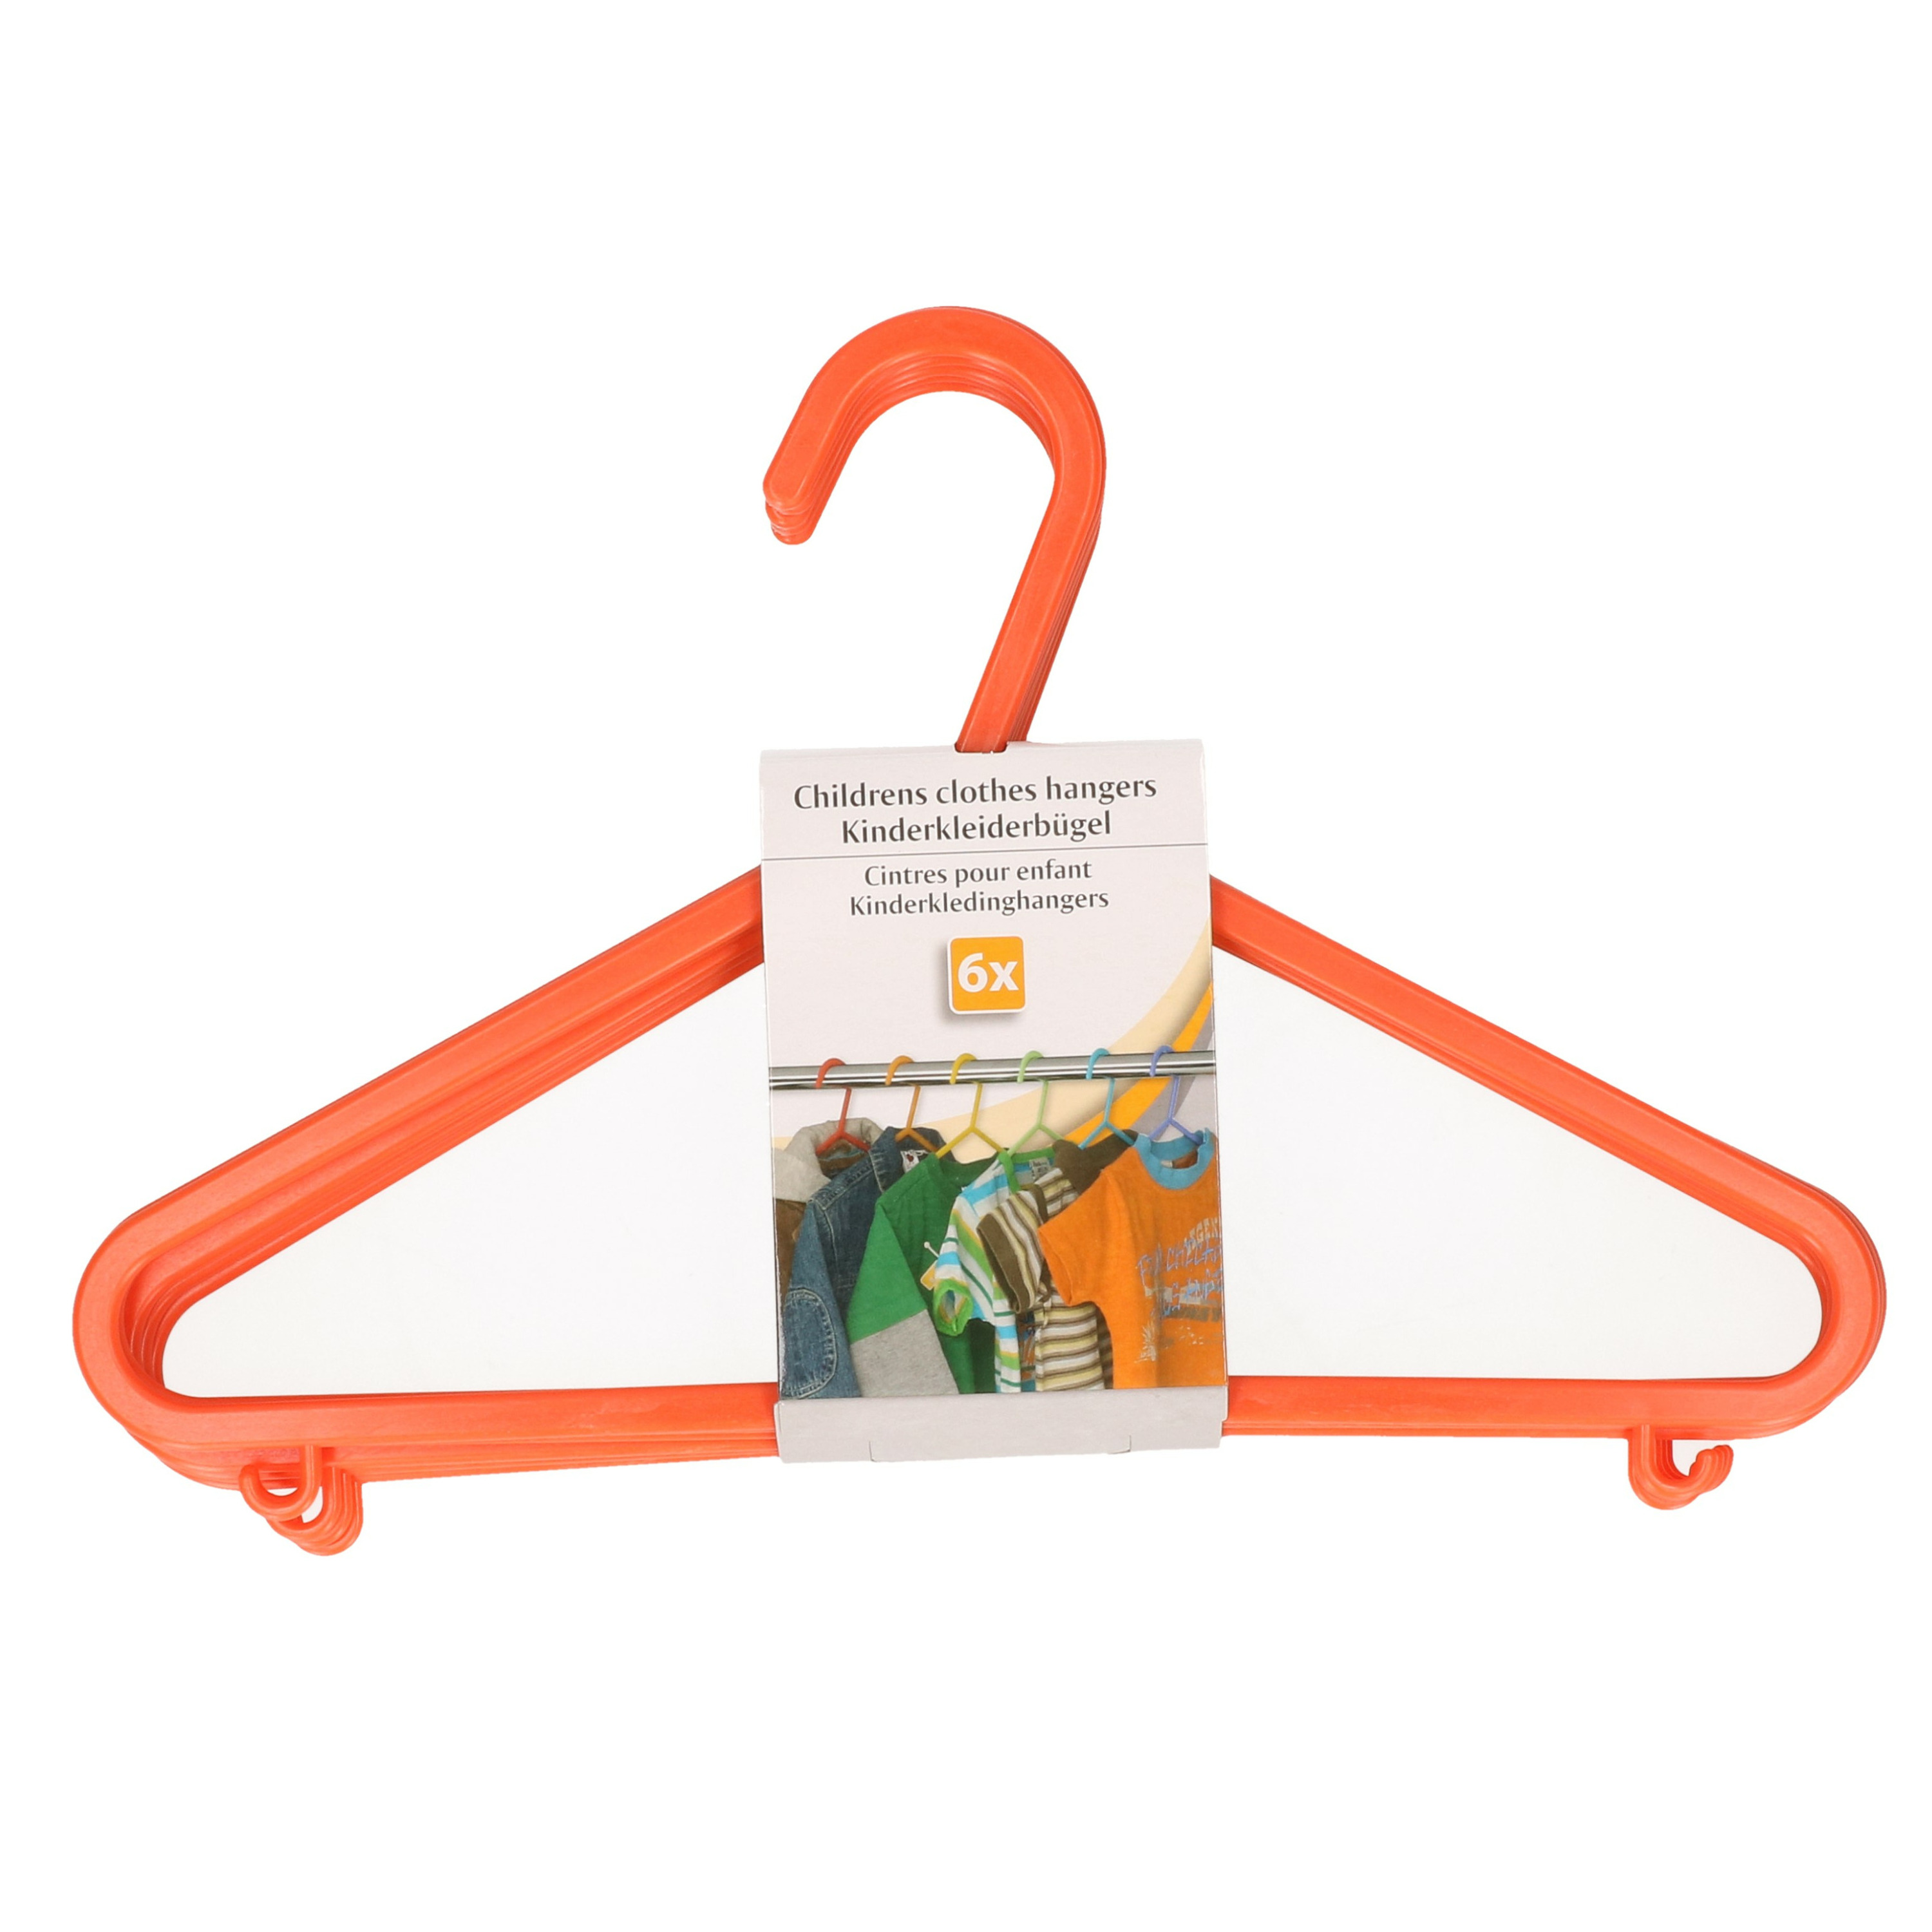 Plastic kinderkleding-baby kledinghangers oranje 6x stuks 17 x 28 cm